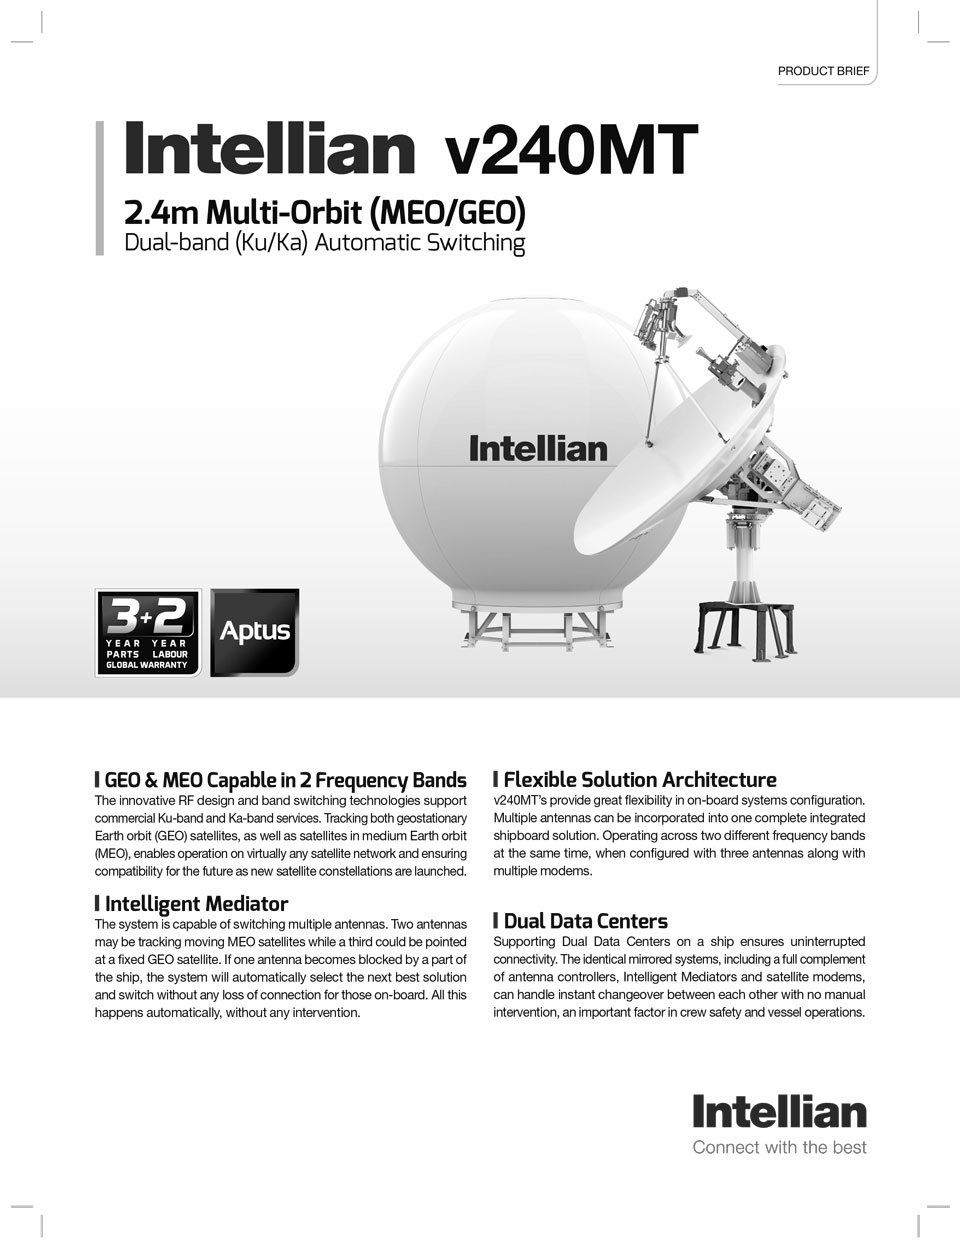 Intellian VSAT v240MT 2.4m Dual-band(Ku_Ka)